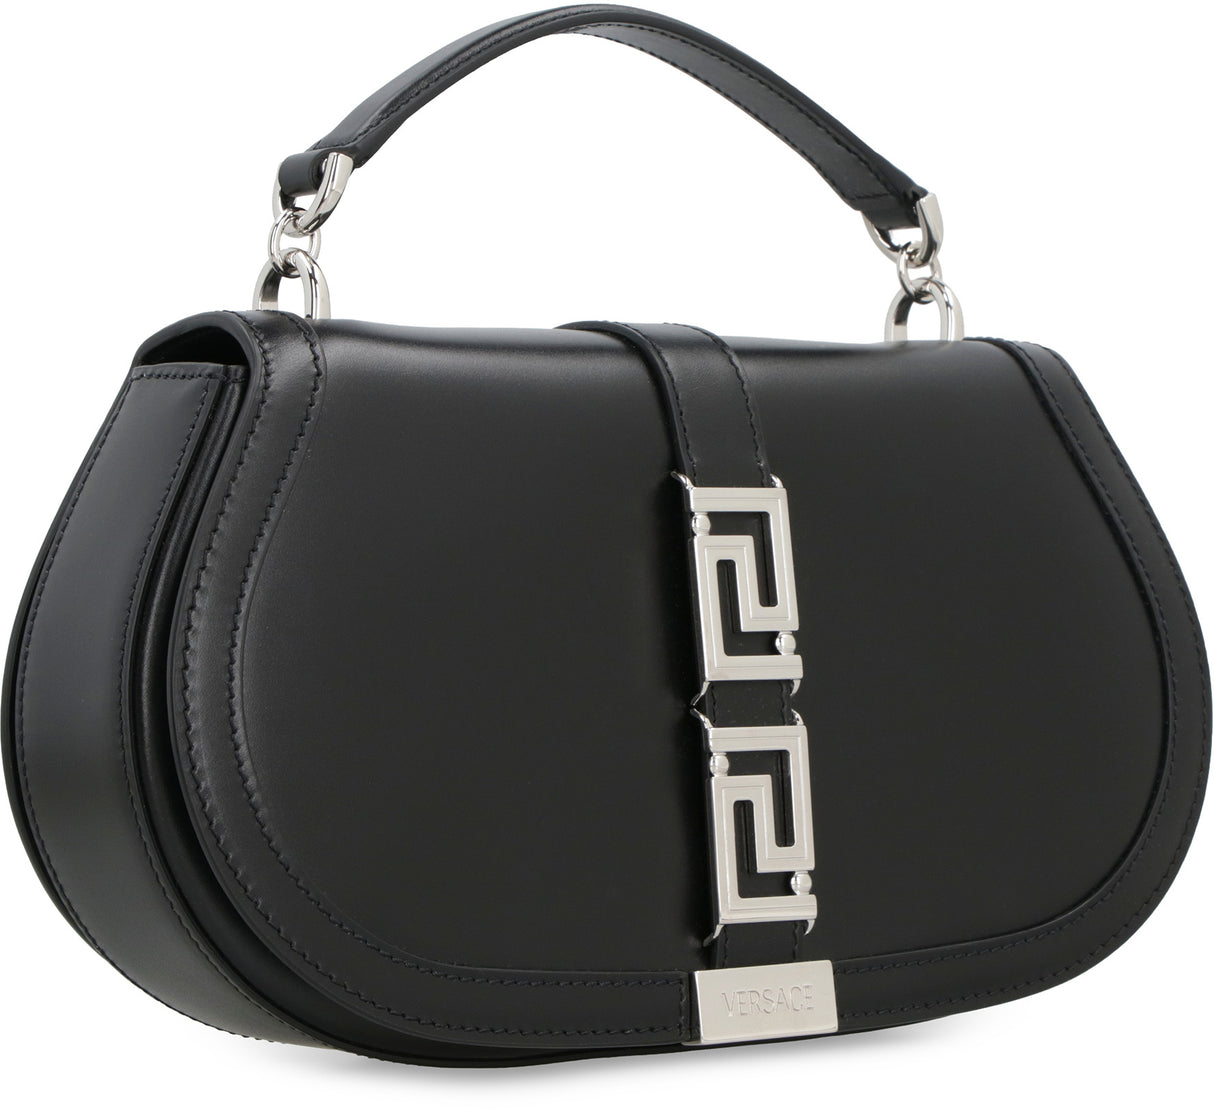 VERSACE Black Greek Goddess Leather Crossbody Handbag for Women - FW23 Collection